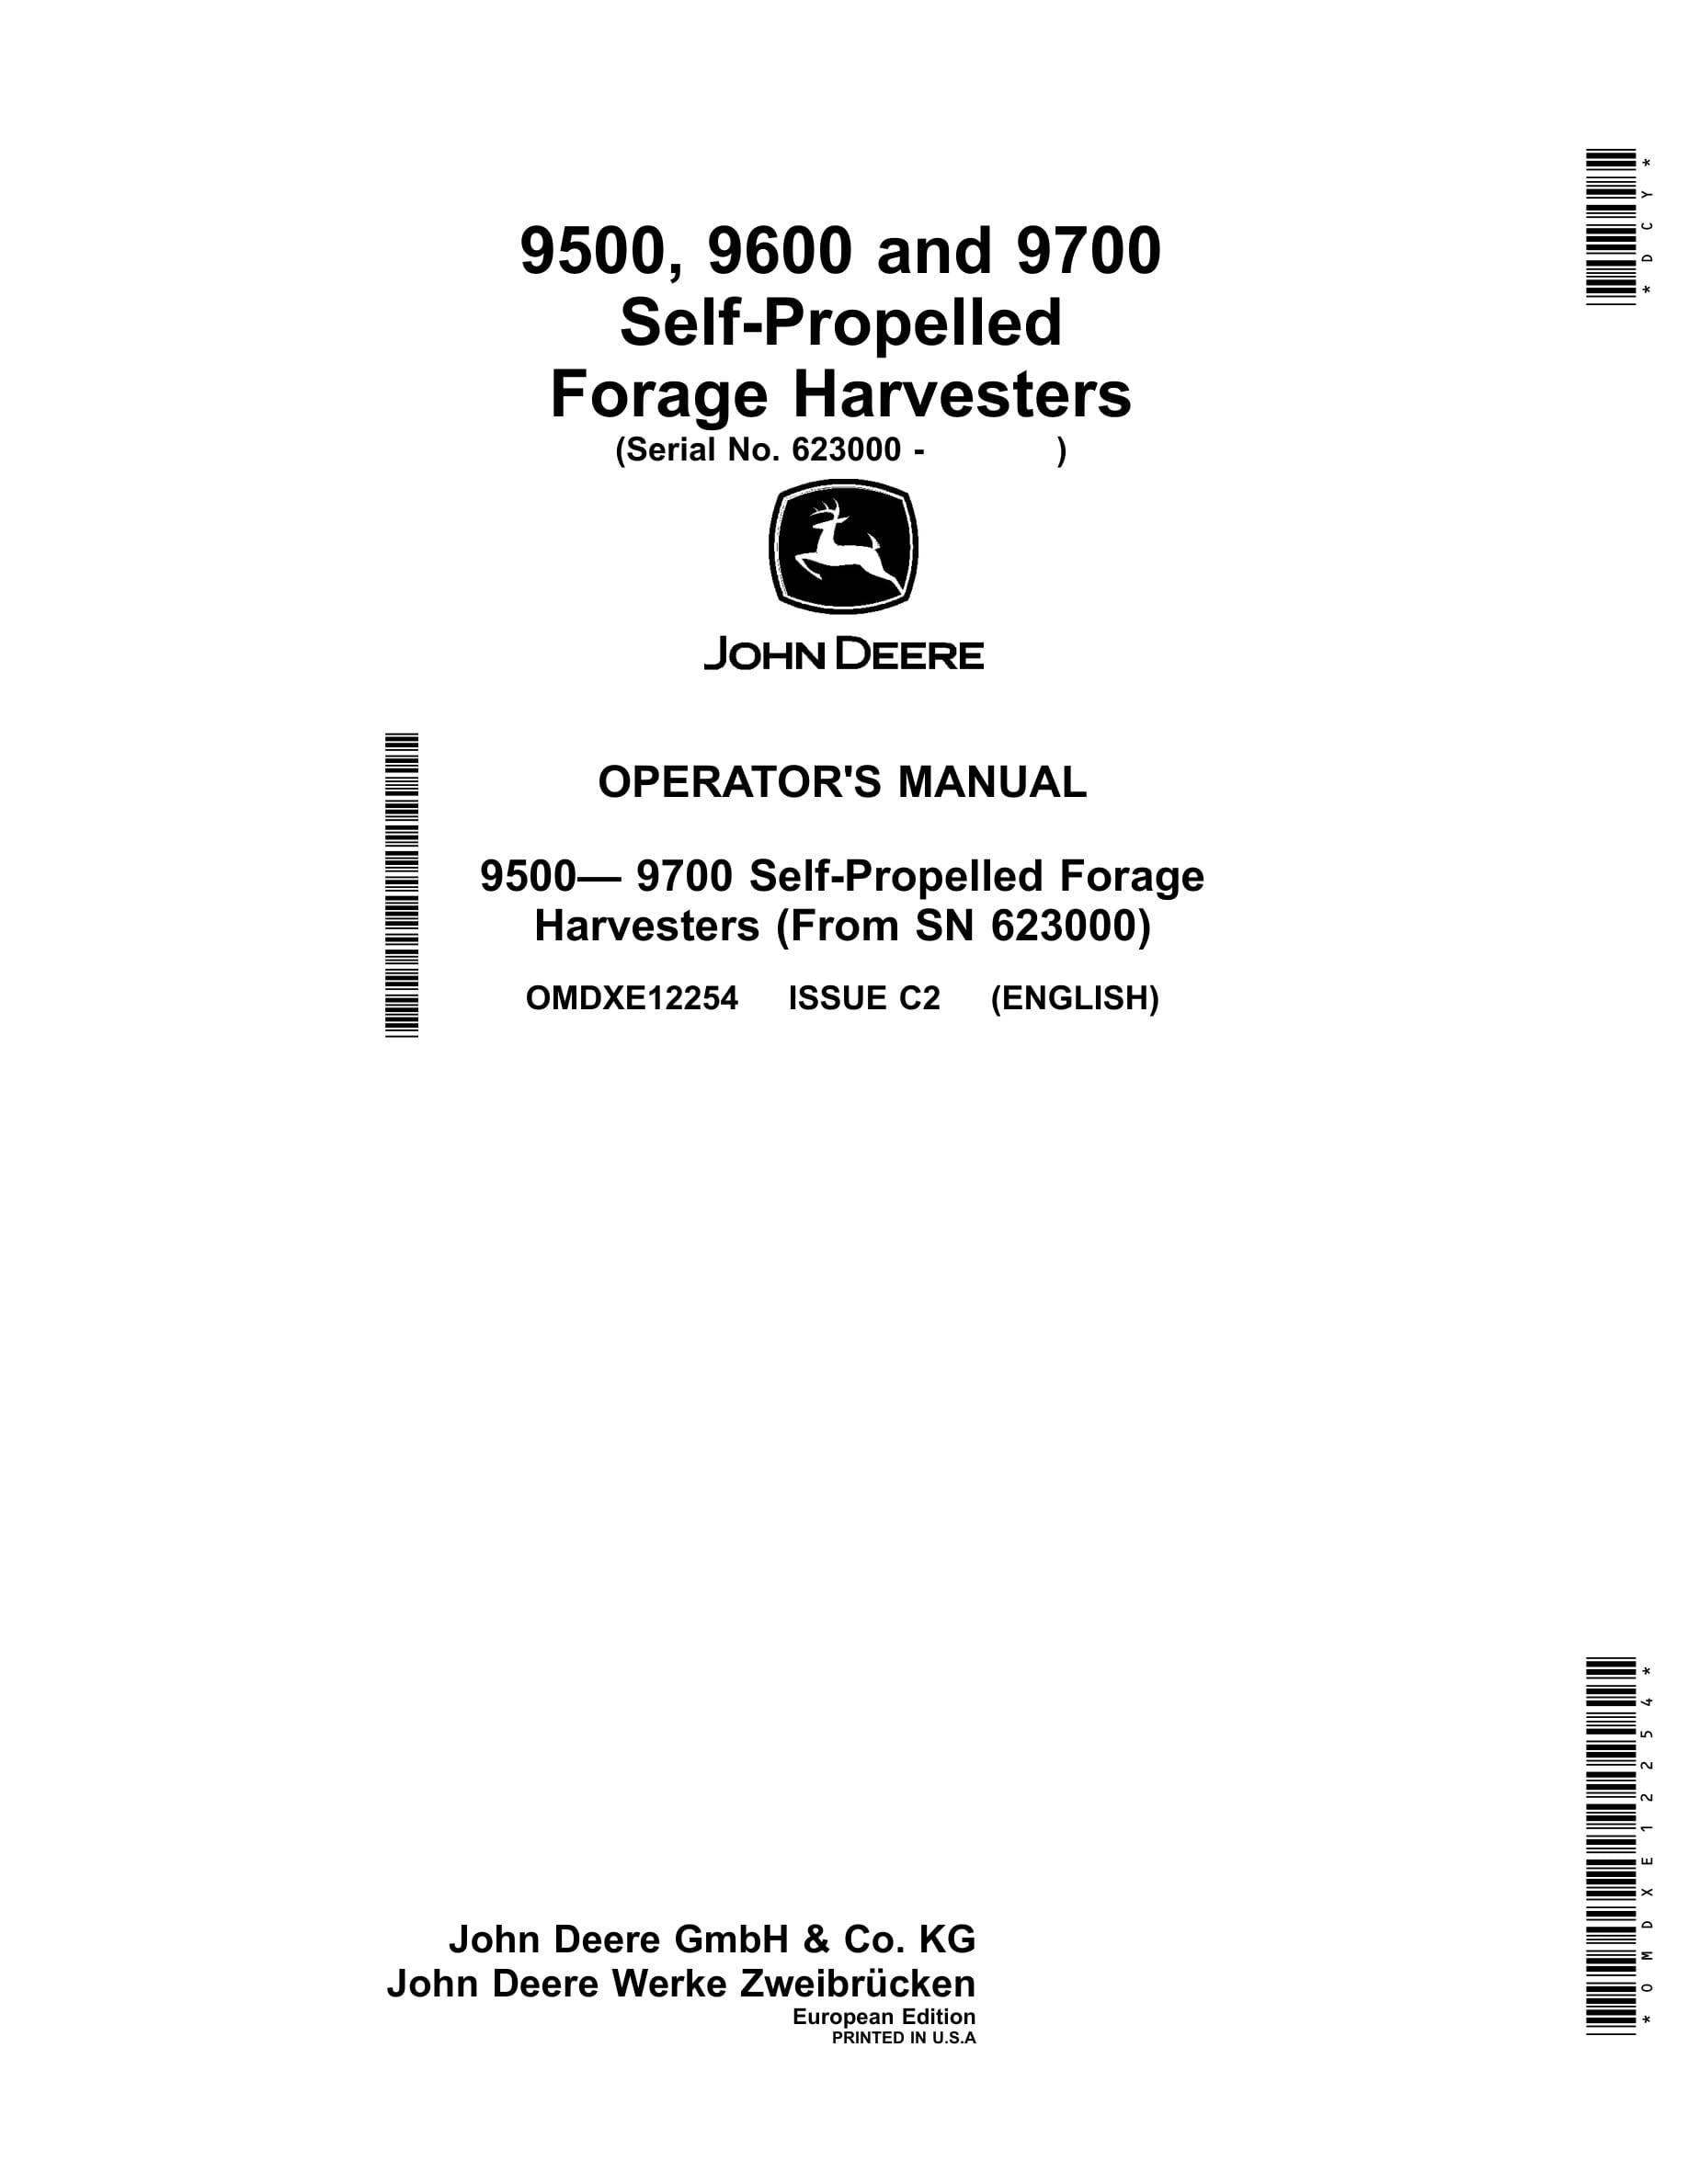 John Deere 9500, 9600 and 9700 Self-Propelled Forage Harvester Operator Manual OMDXE12254-1